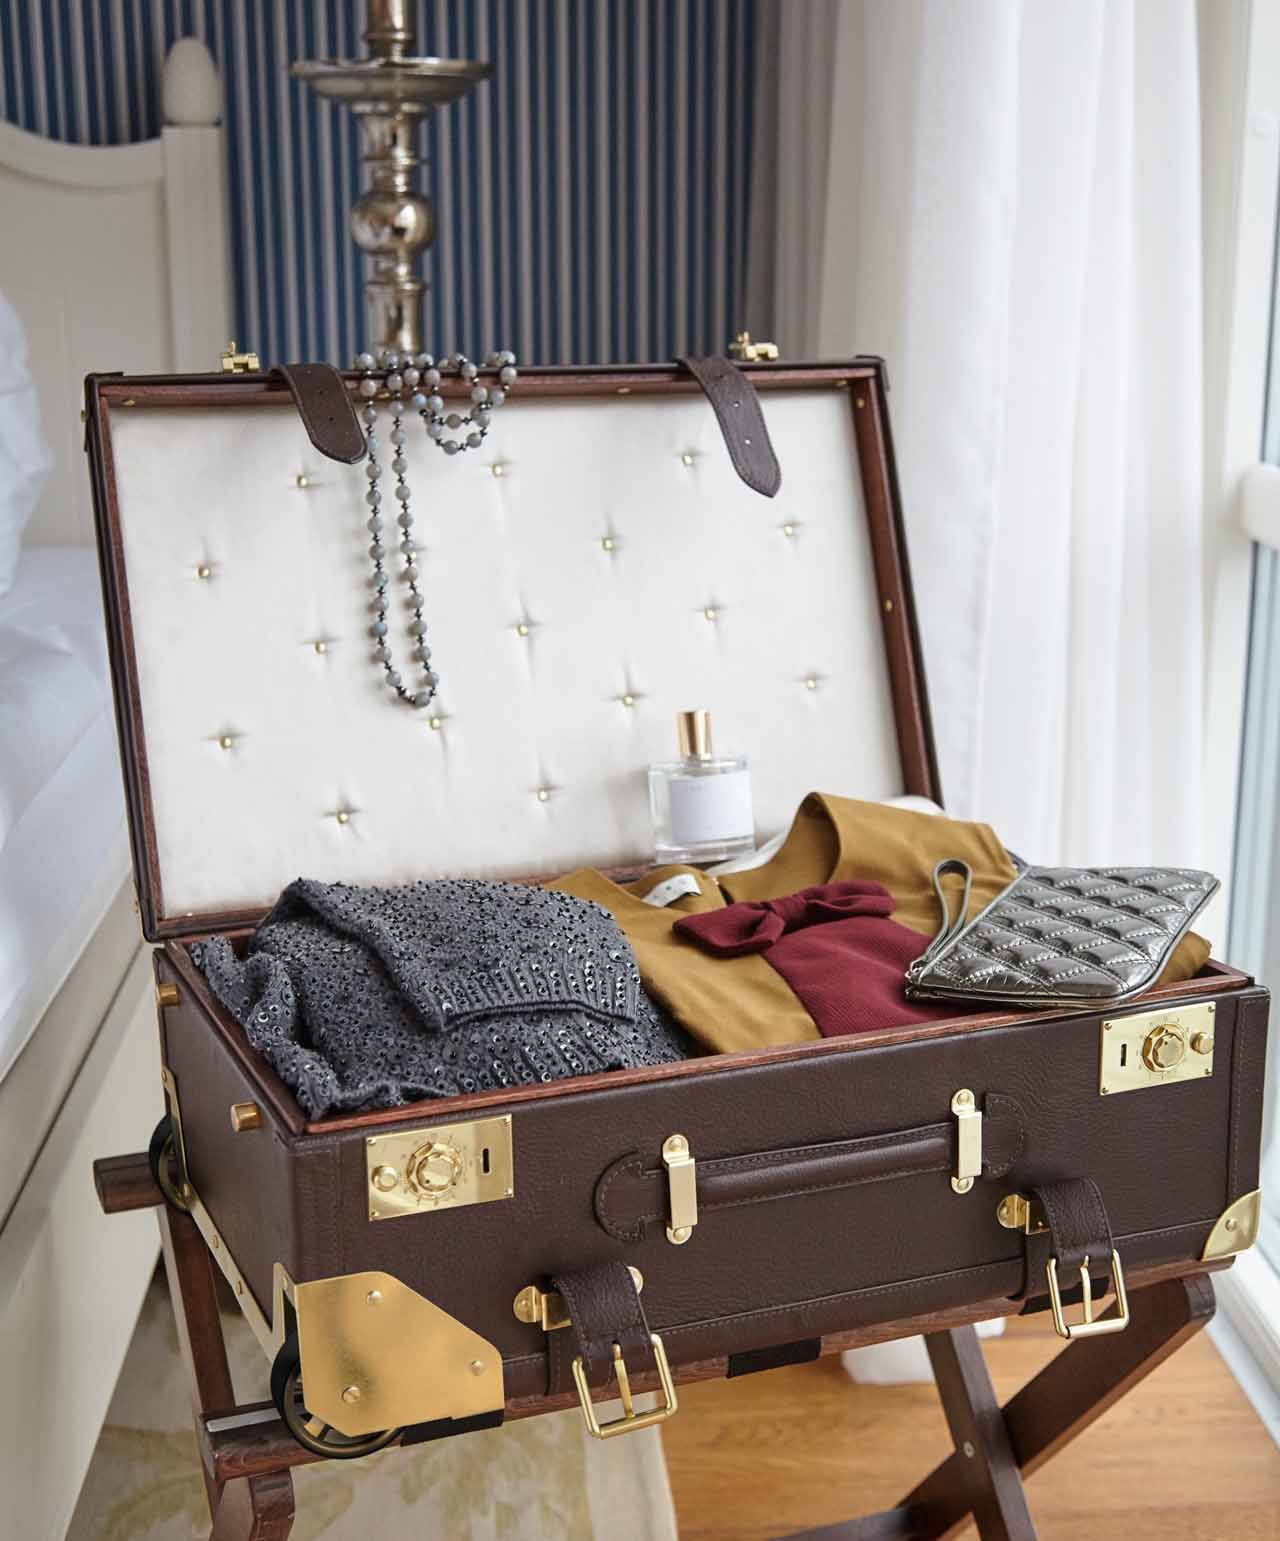 Mauro Bianucci, wilkens, bespoke luggage, suitcase, trunk